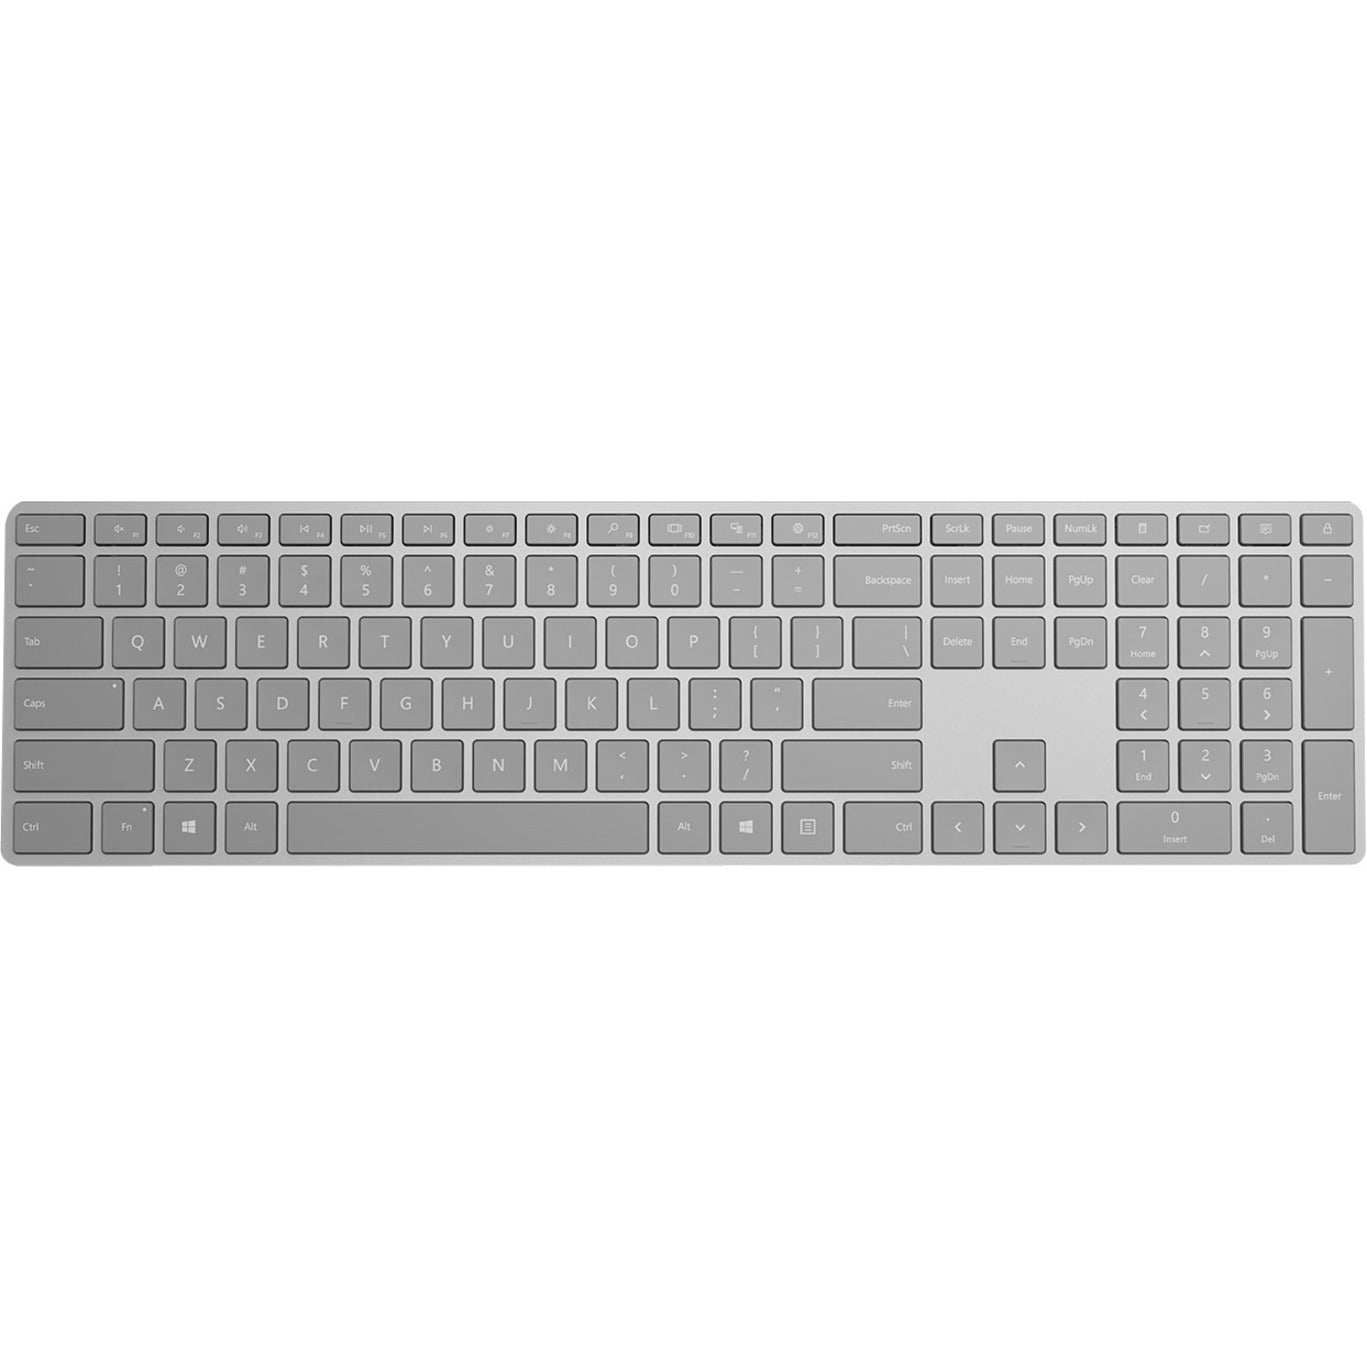 Microsoft 3YJ-00022 Surface Keyboard, Wireless Bluetooth QWERTY Keyboard for iOS, Windows, Android, Mac